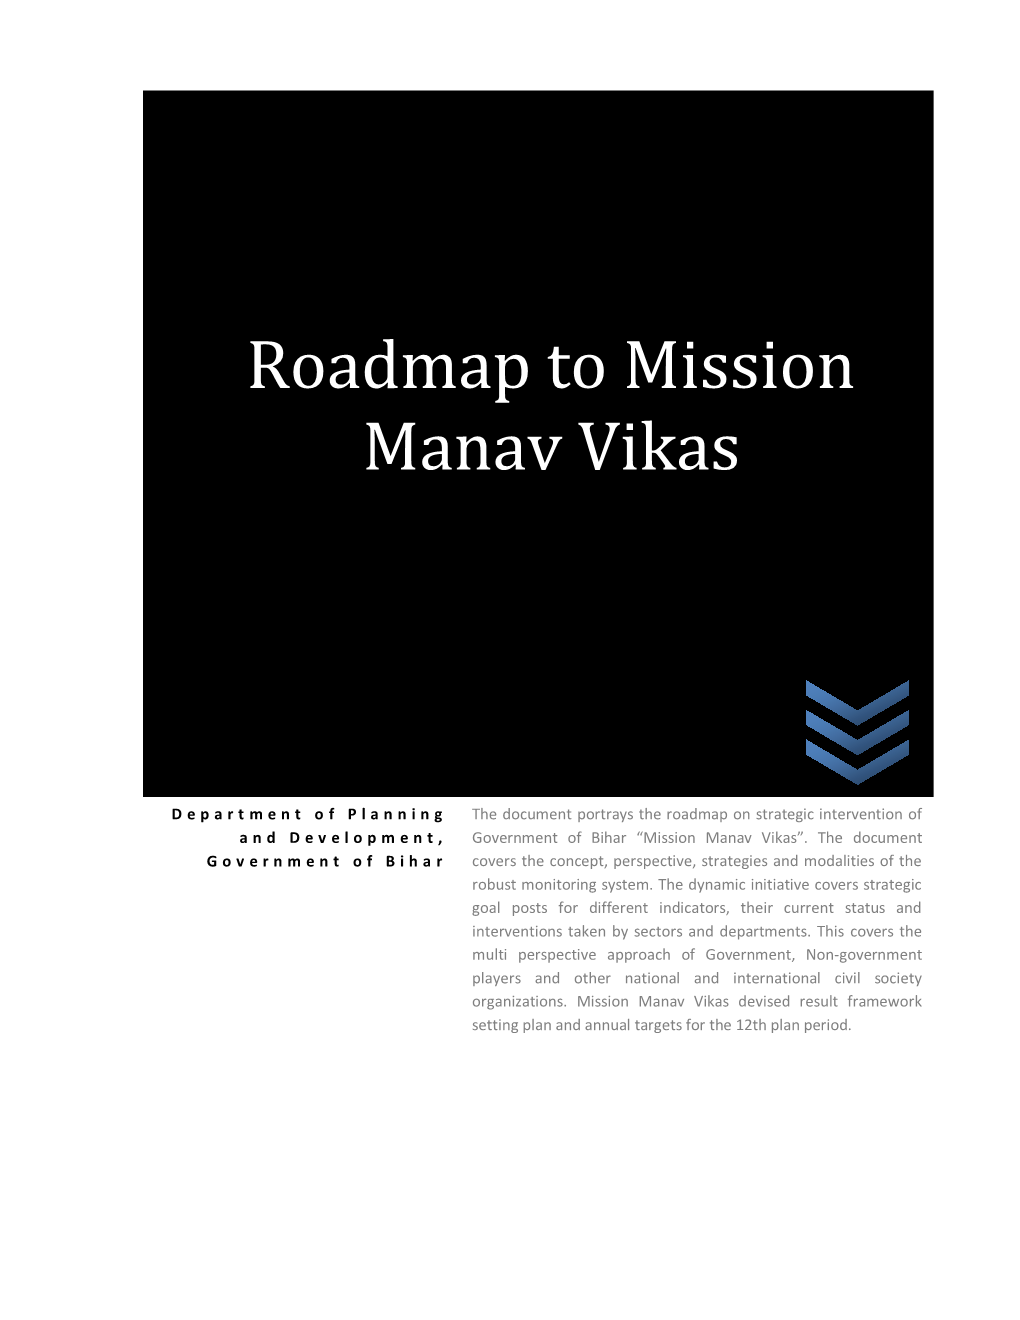 Roadmap to Mission Manav Vikas